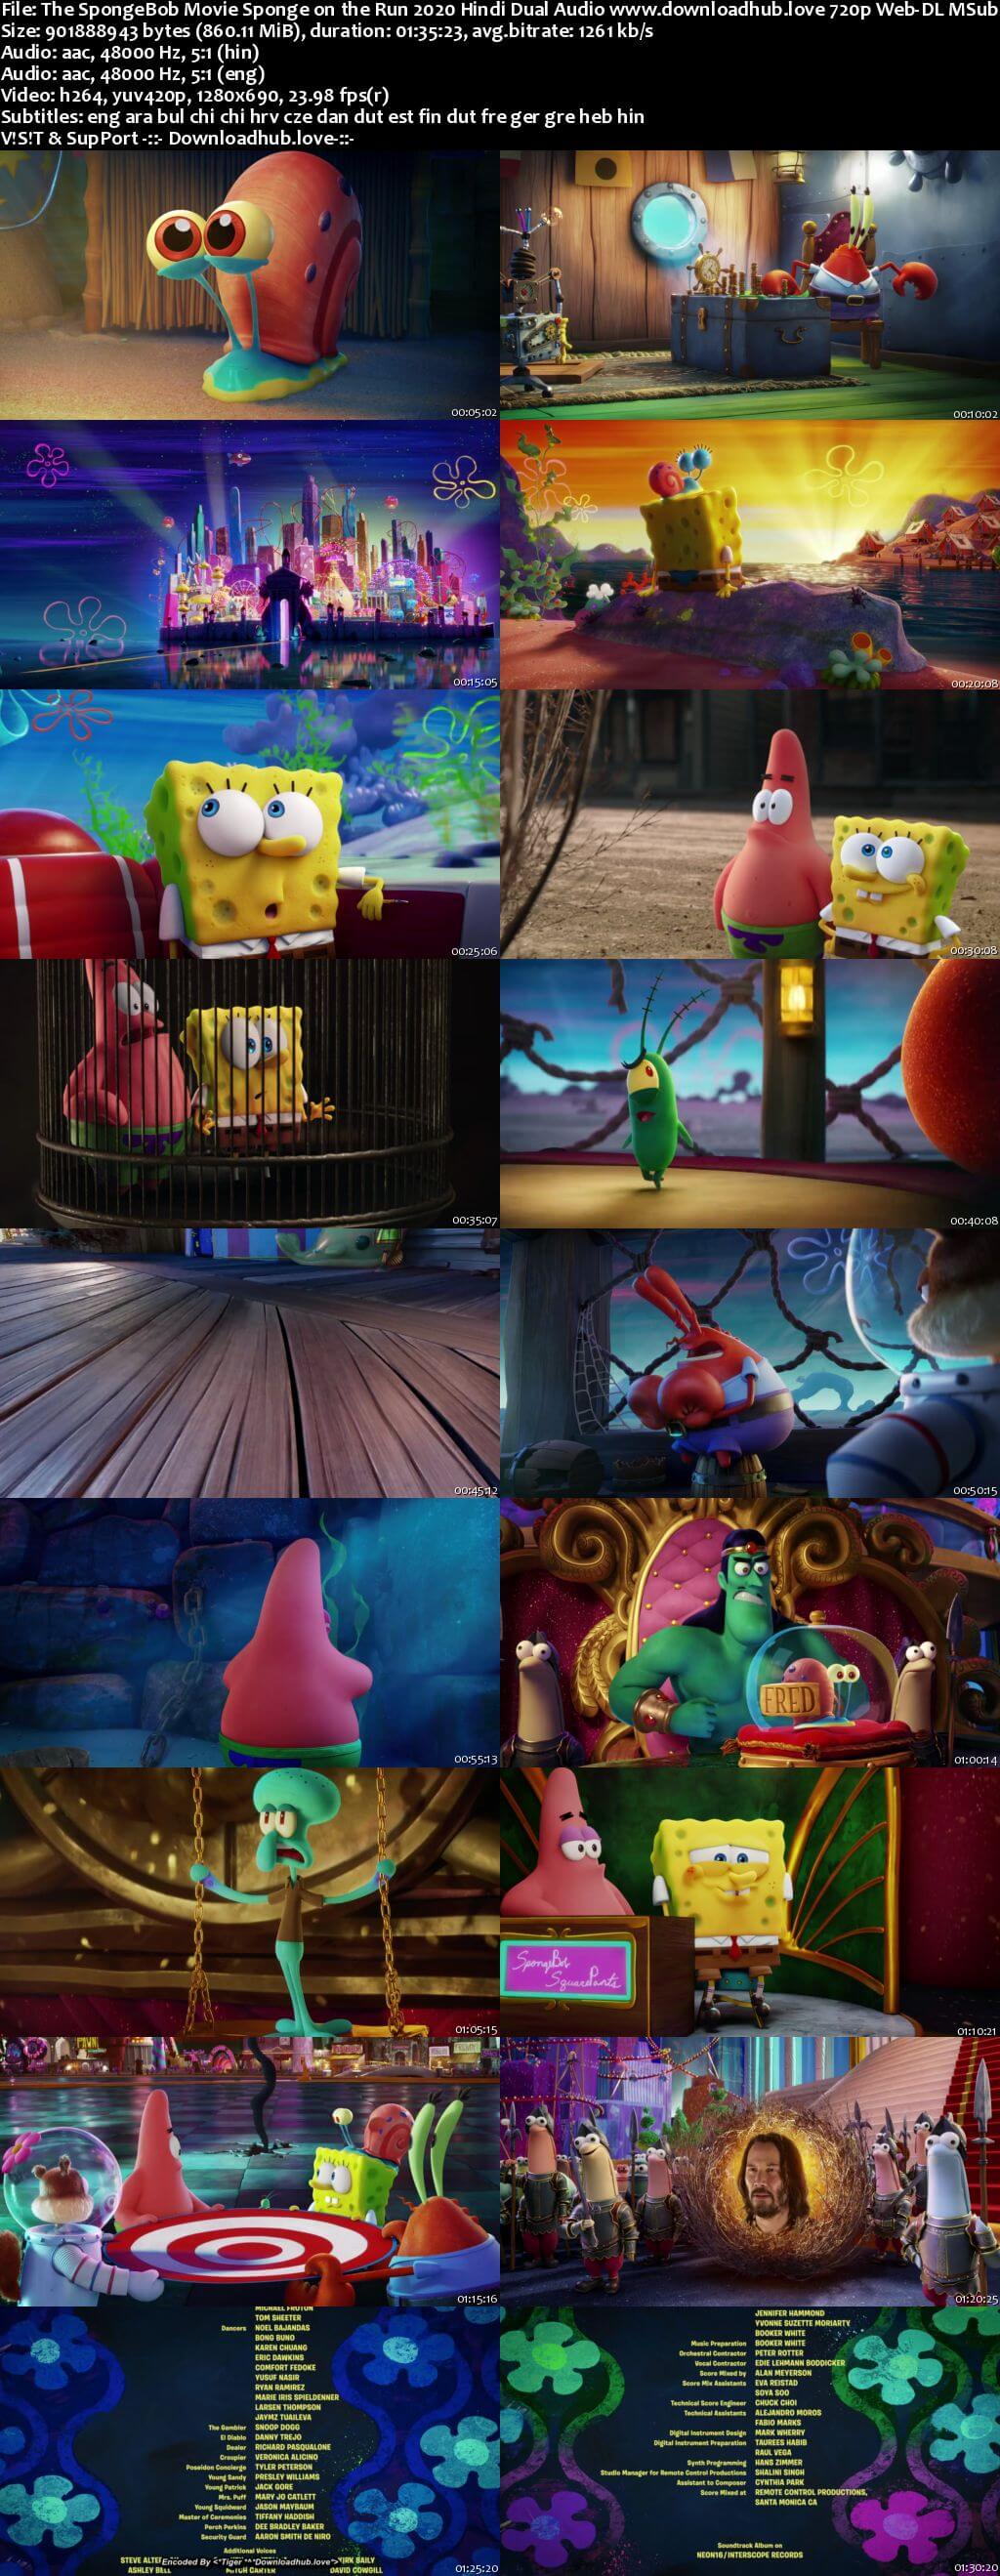 The SpongeBob Movie Sponge on the Run 2020 Hindi Dual Audio 720p Web-DL MSubs